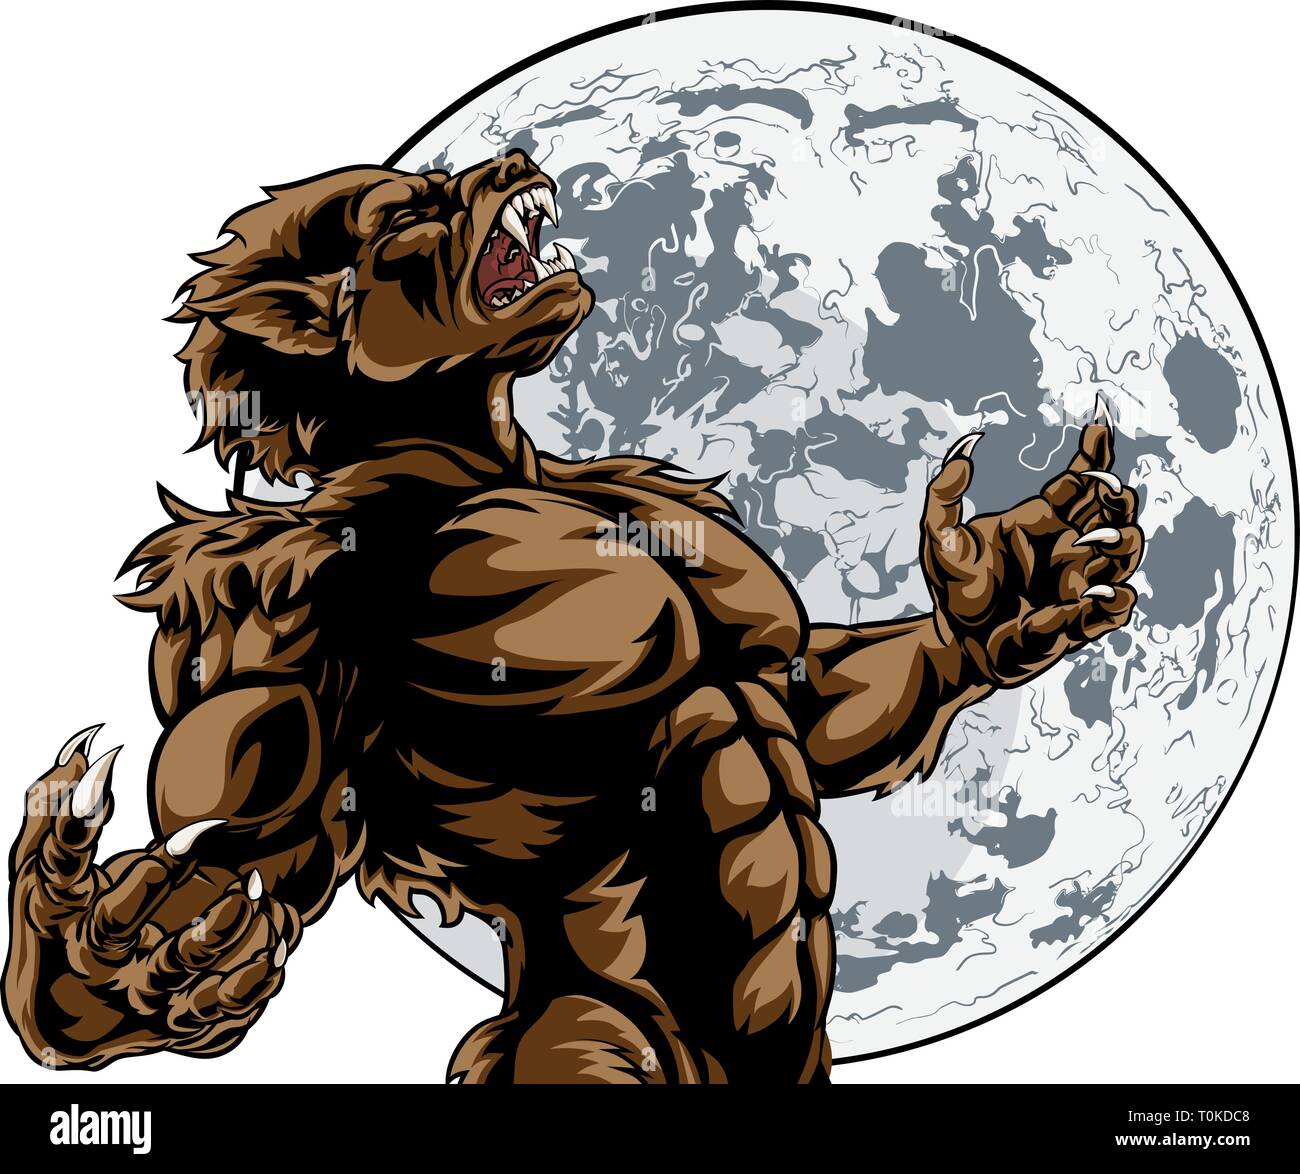 Howling Vollmond Werwolf Monster Stock-Vektorgrafik - Alamy